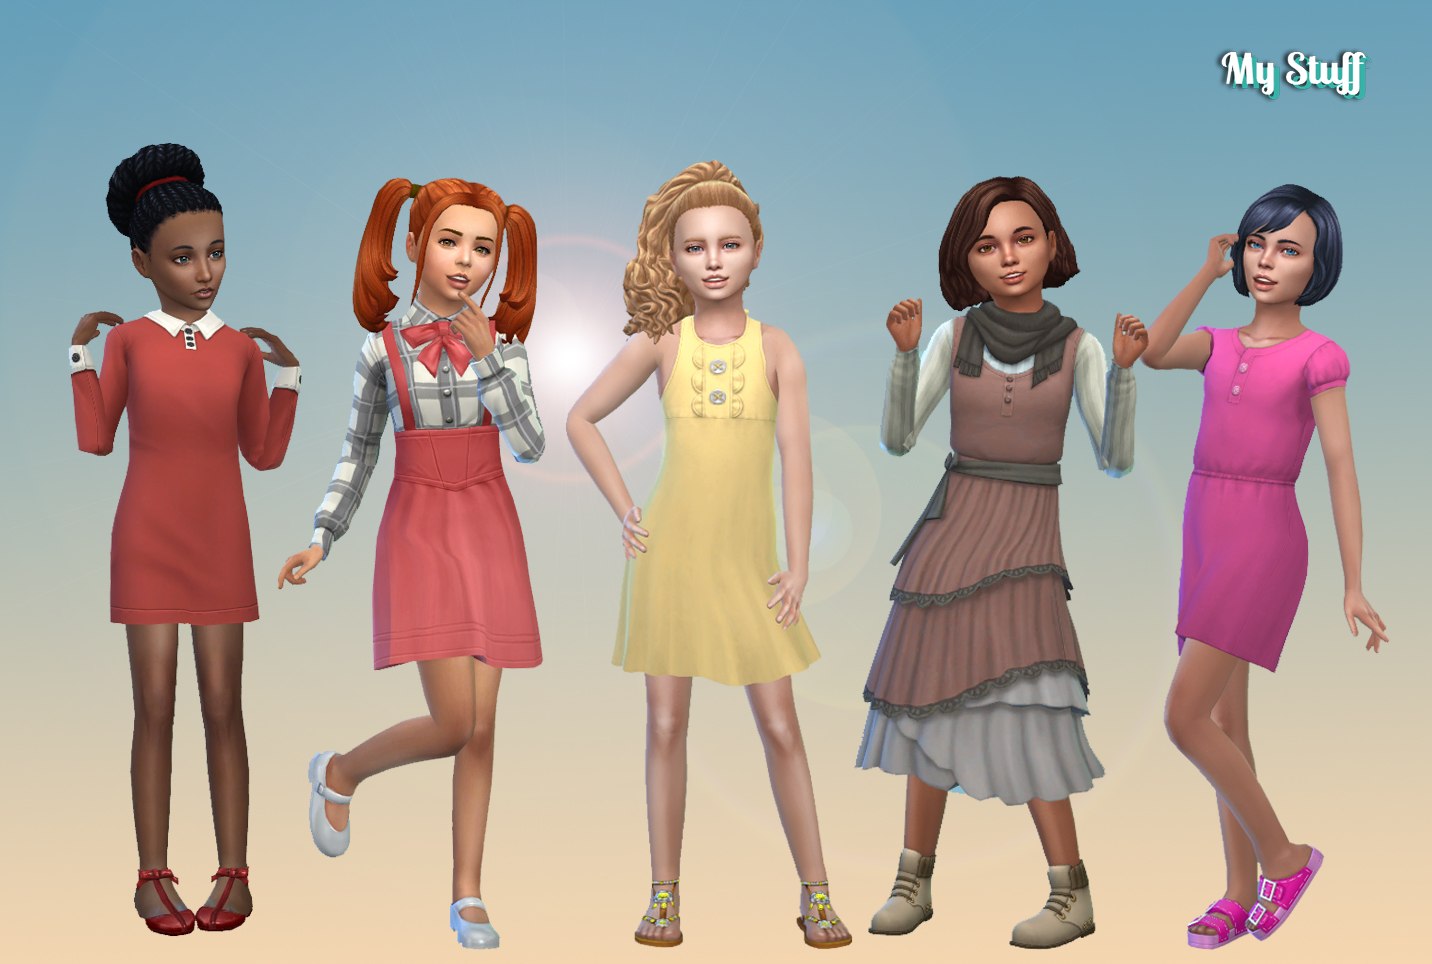 Sims 4 mods sim child. SIMS для детей. SIMS 4 дети. SIMS 4 симы дети. Симы child симс 4.